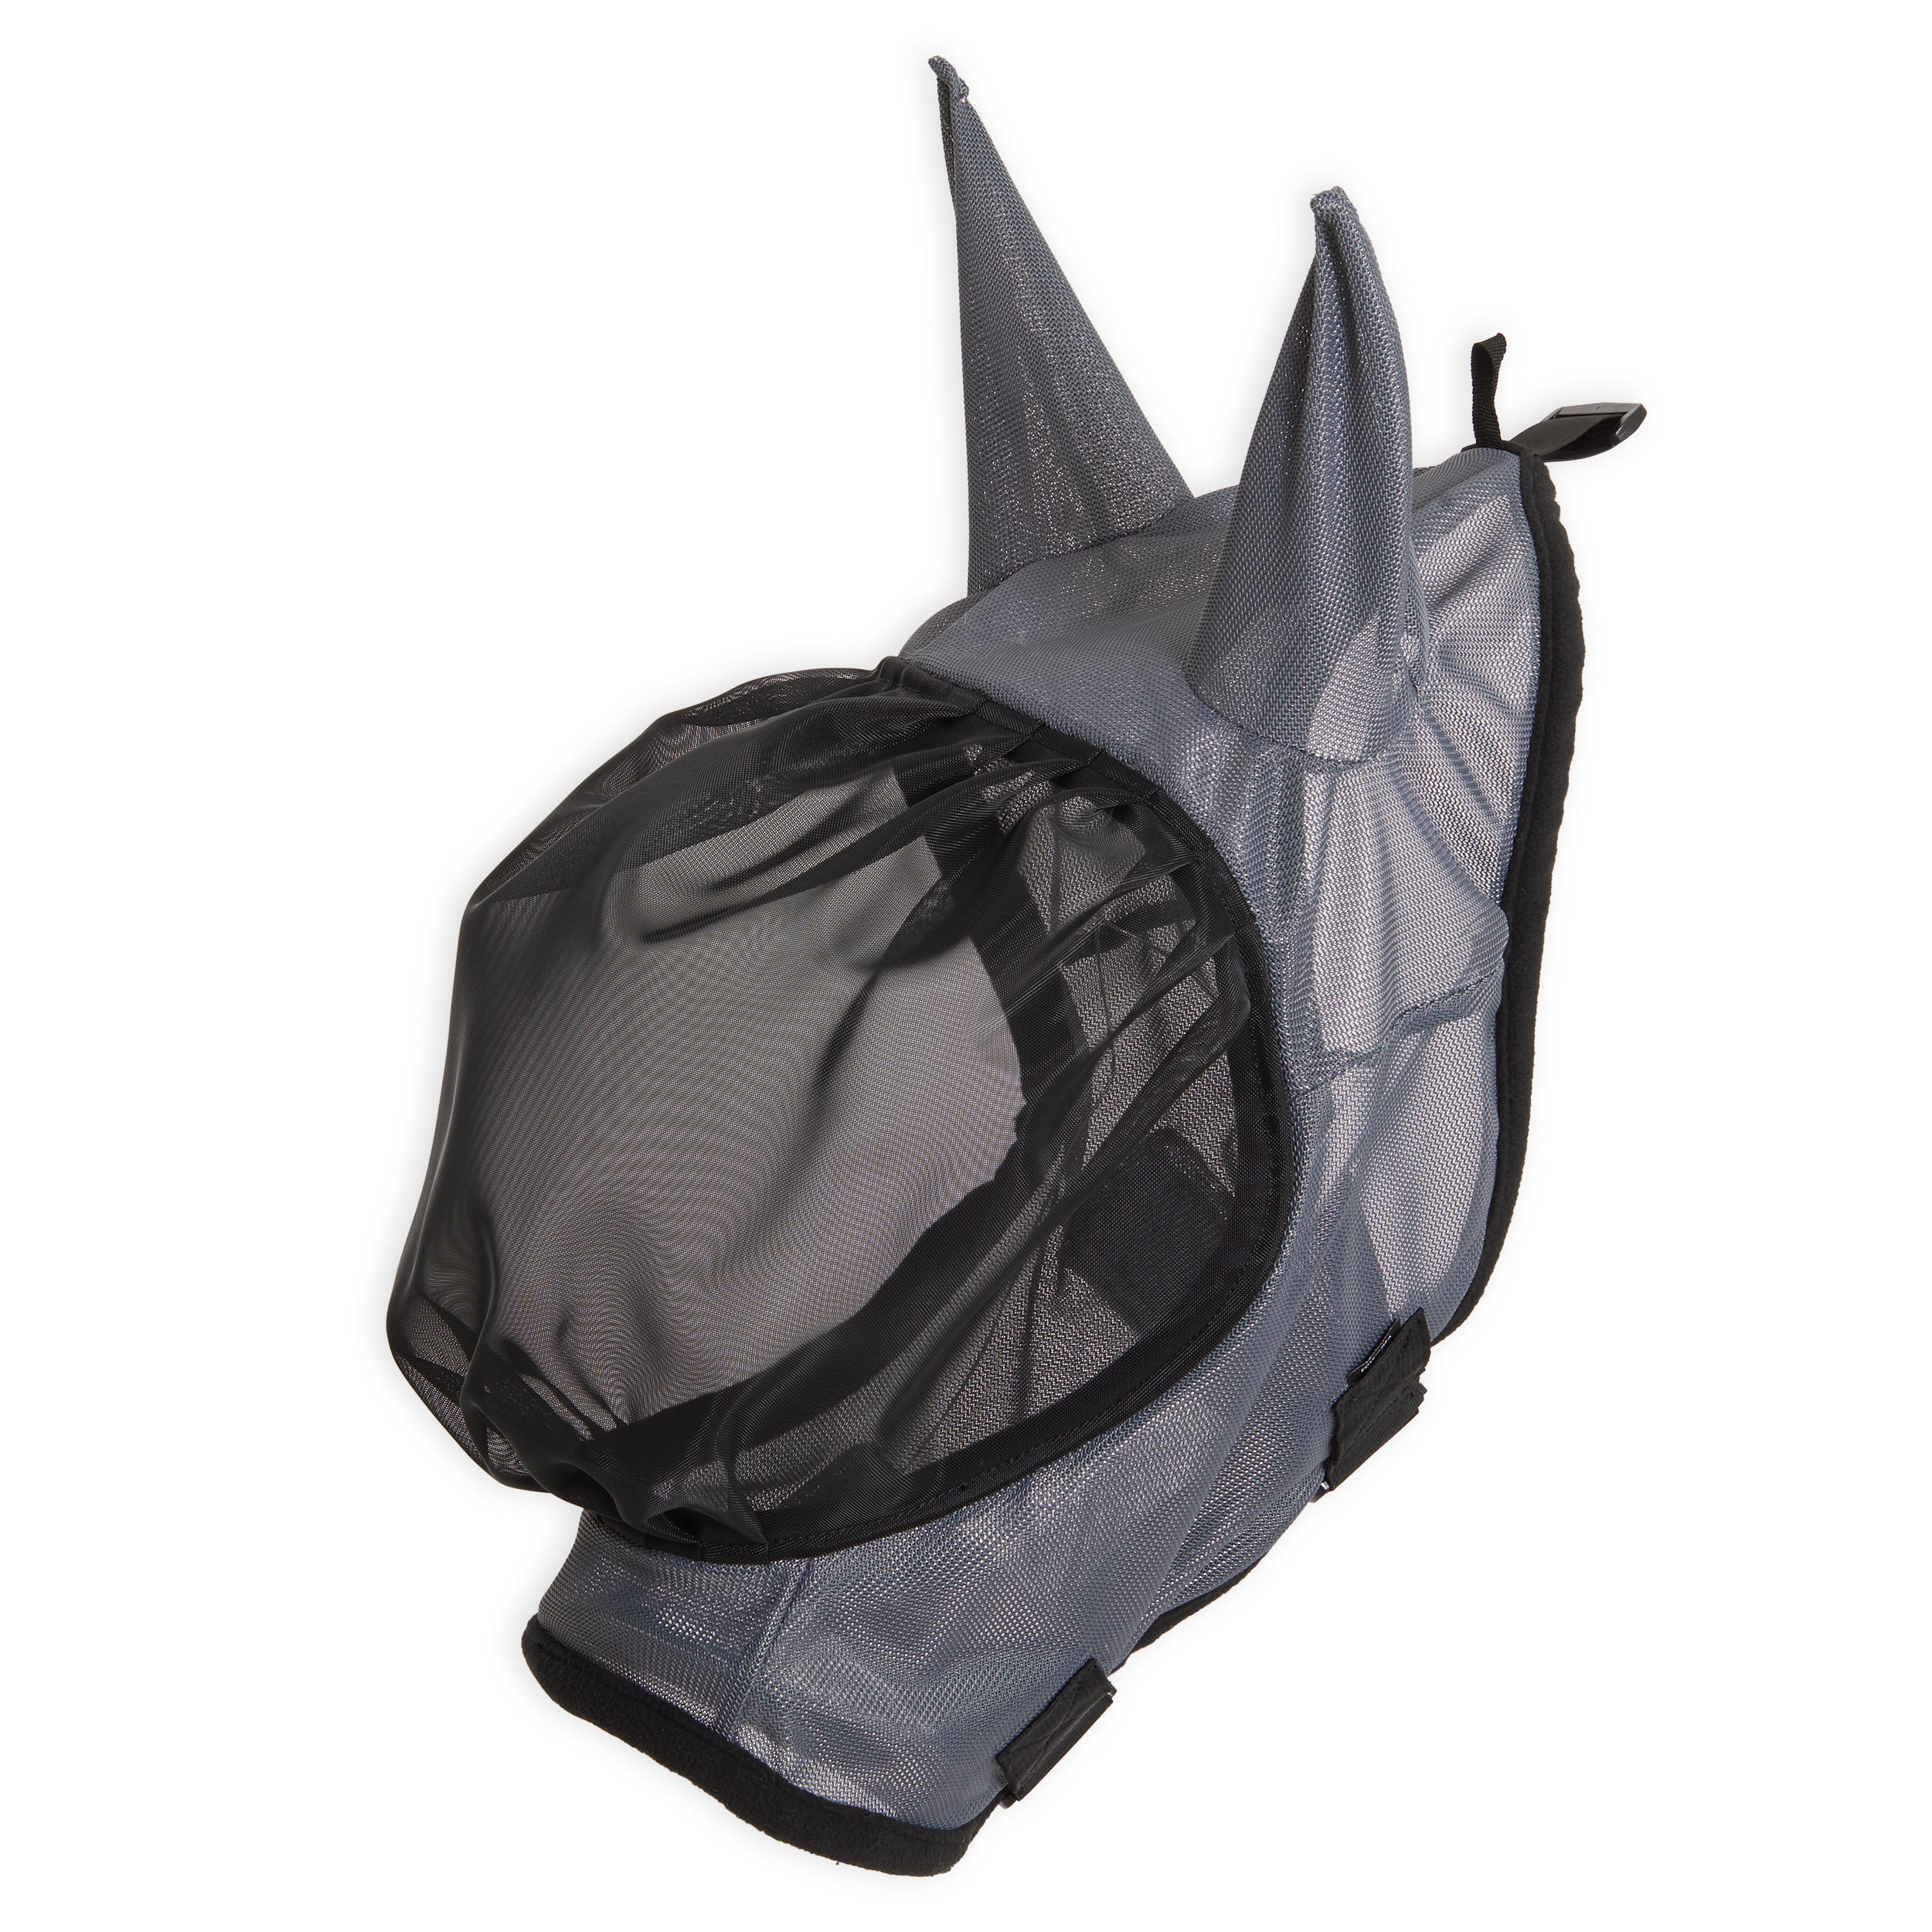 Mască protecție insecte 500 gri cal La Oferta Online decathlon imagine La Oferta Online